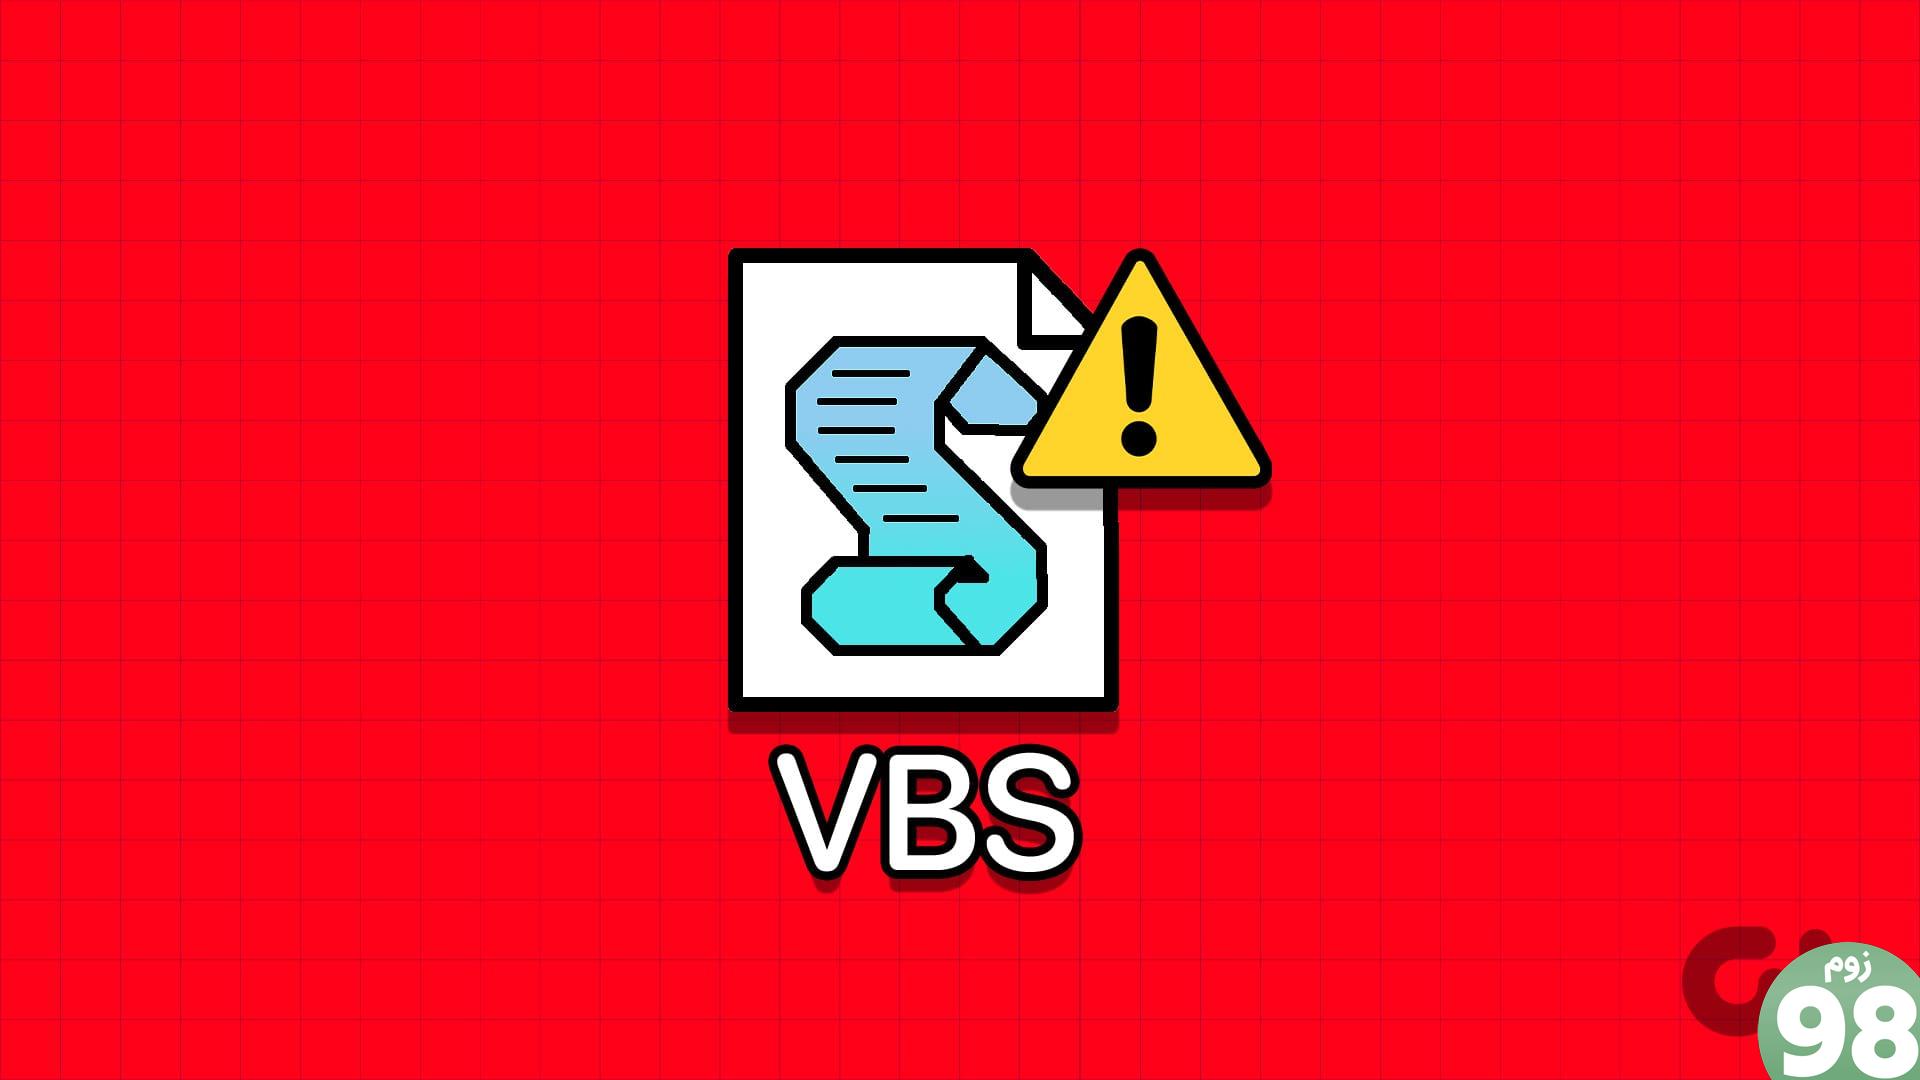 VBS امنیت مبتنی بر مجازی سازی را در ویندوز غیرفعال کنید